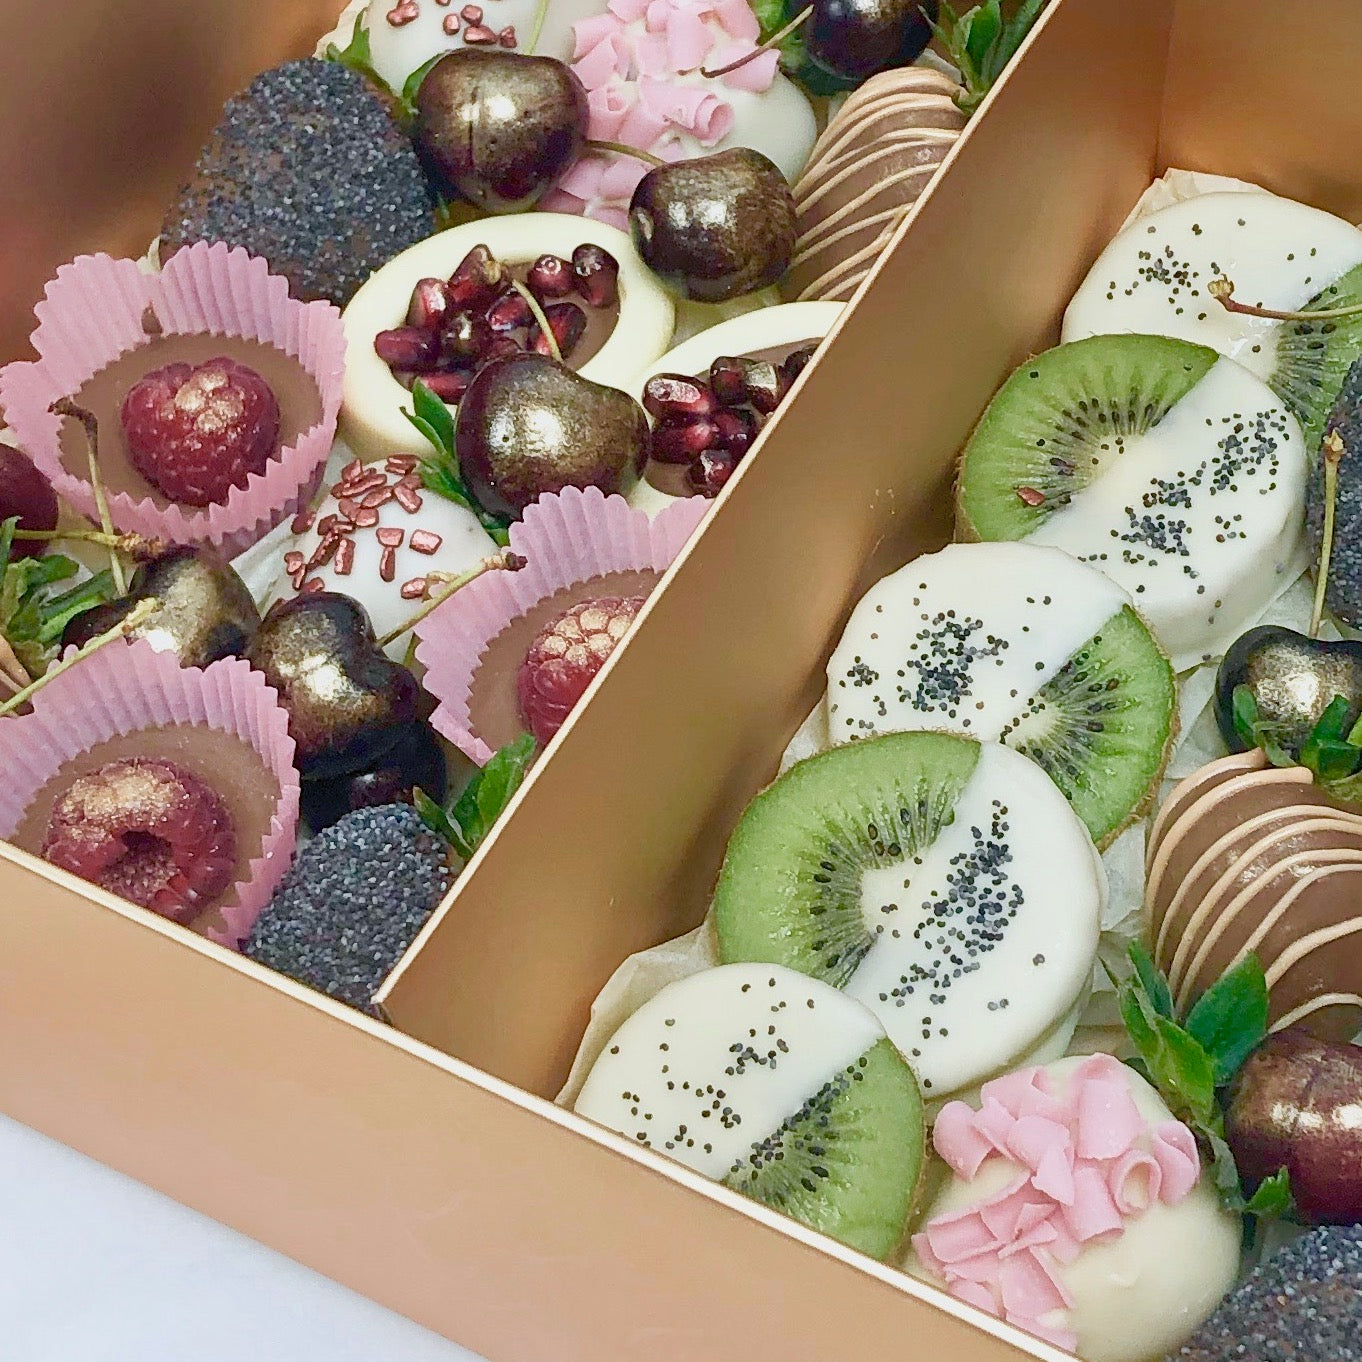 Mixed Chocolate Fruits & Berries Gift Hamper chocolate fruits and berries treat box